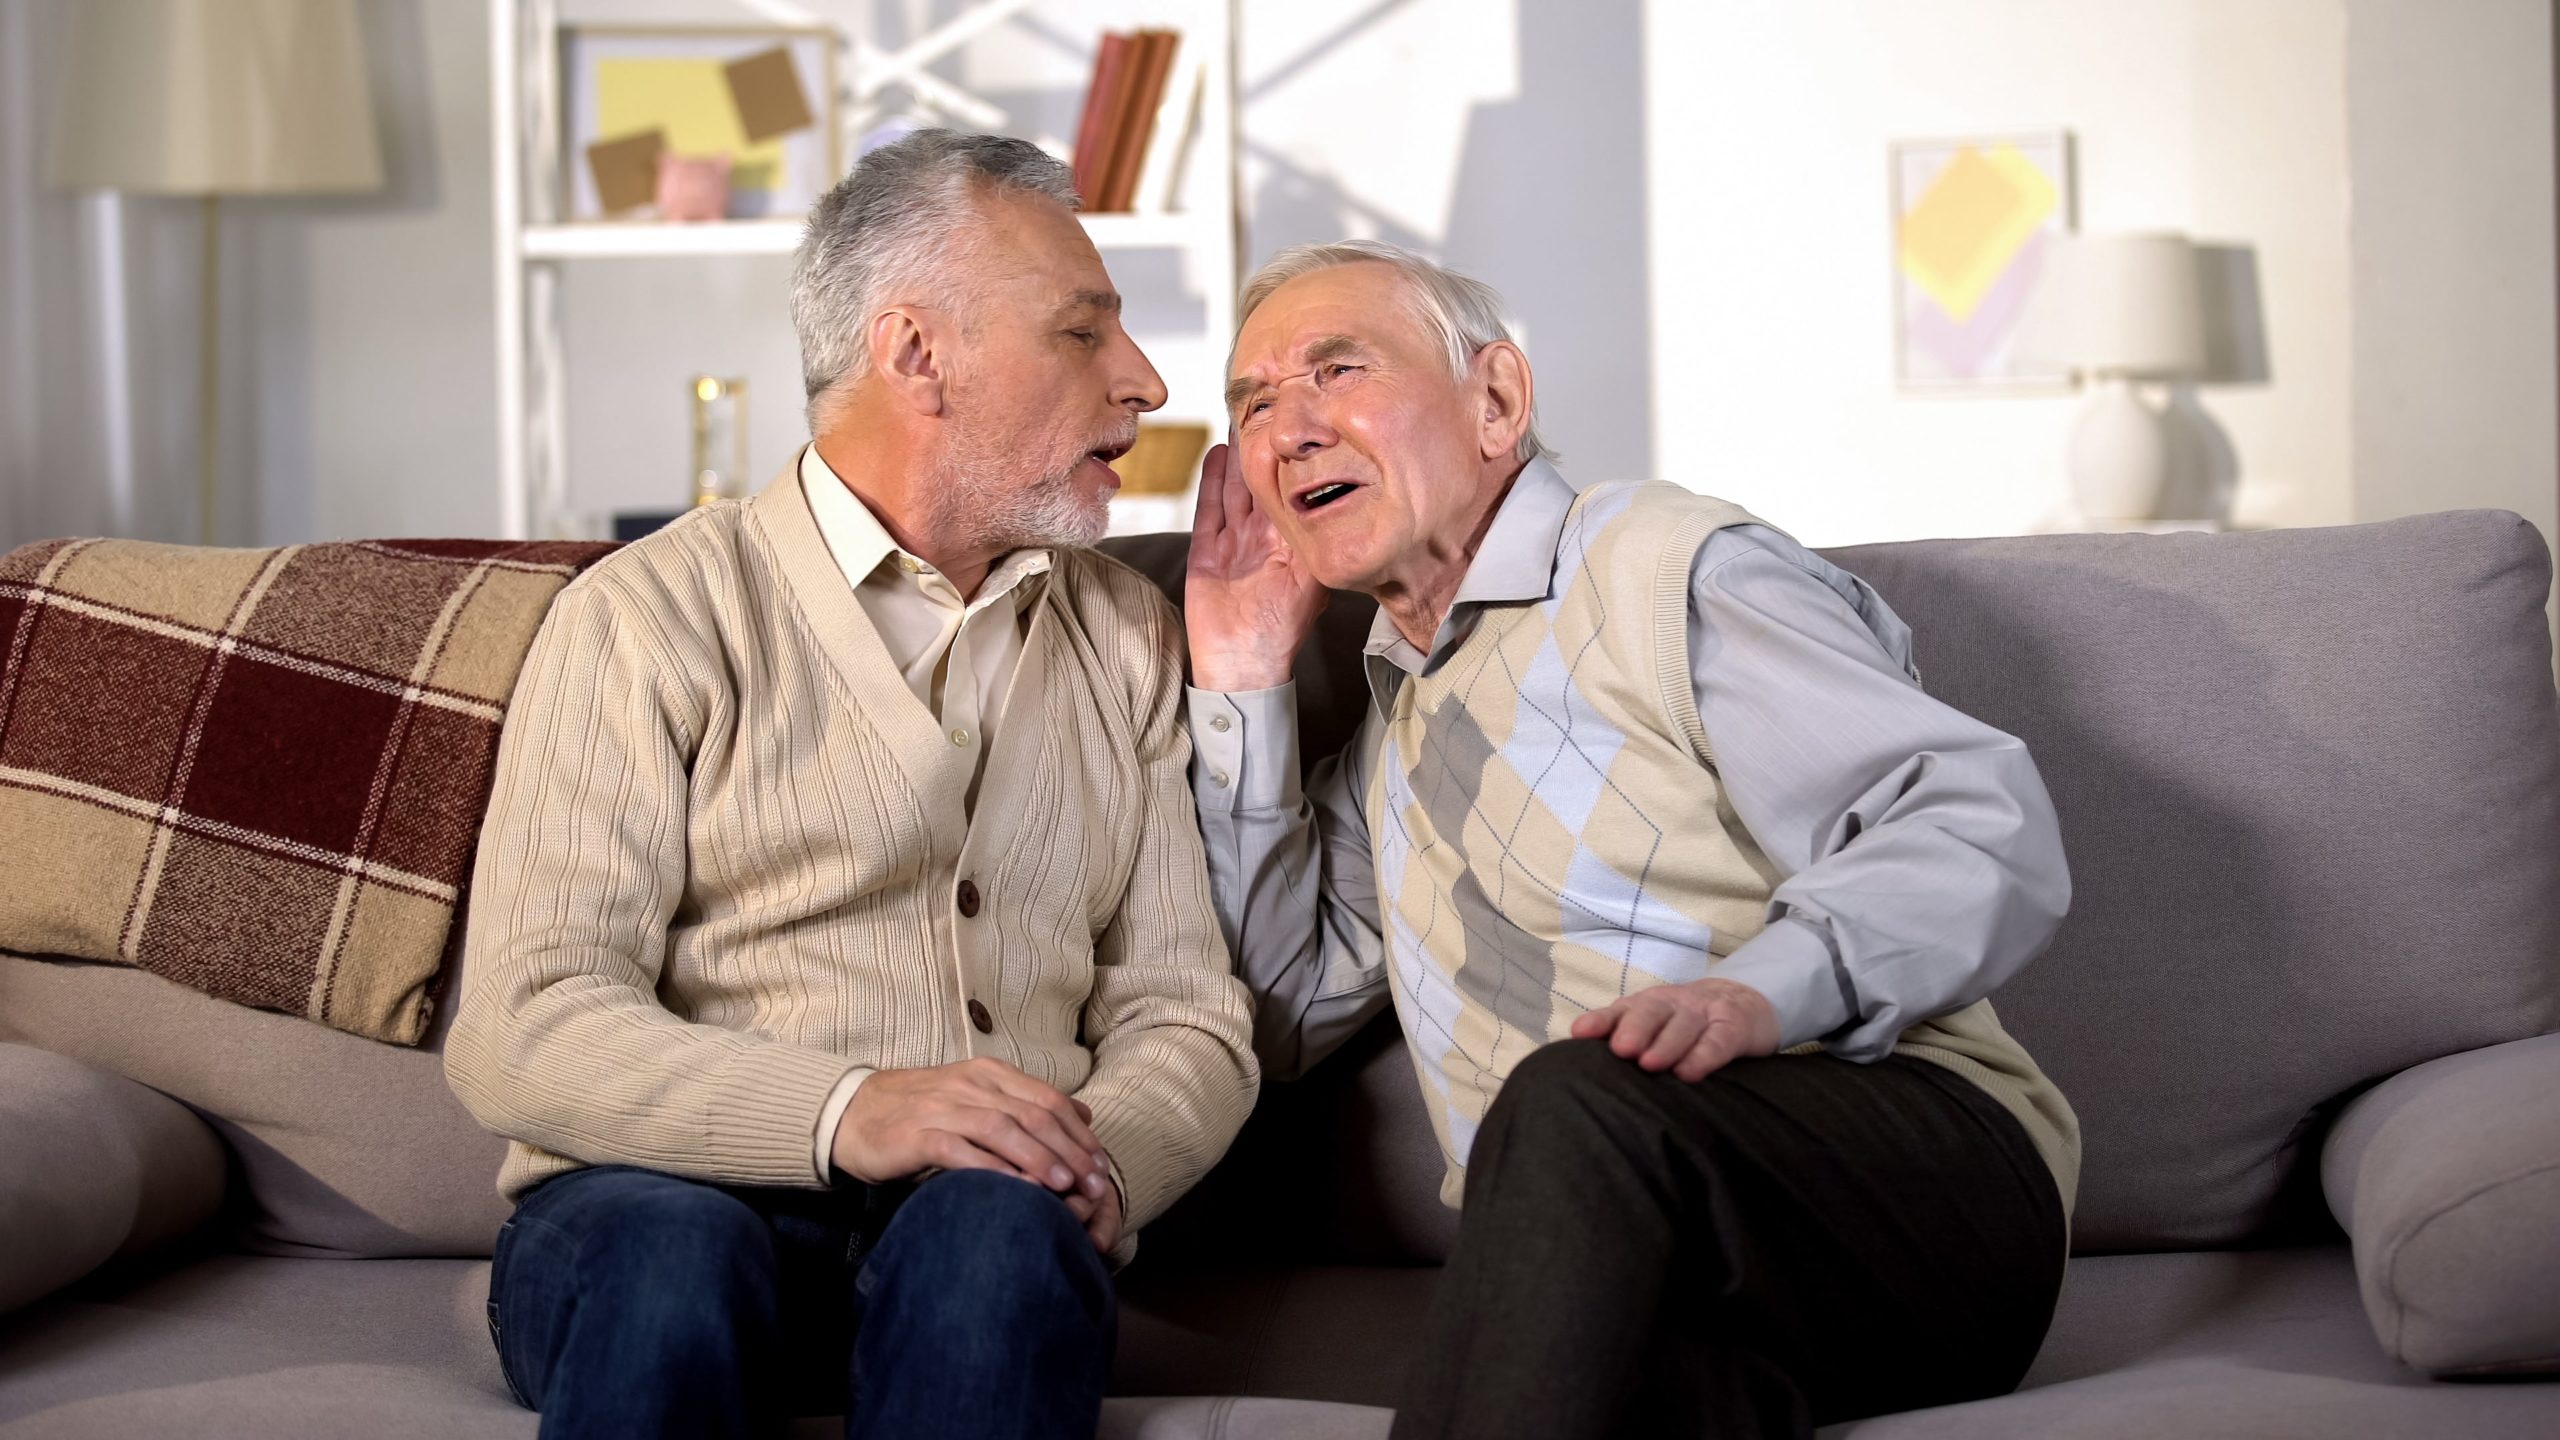 Elderly men struggling to hear each other